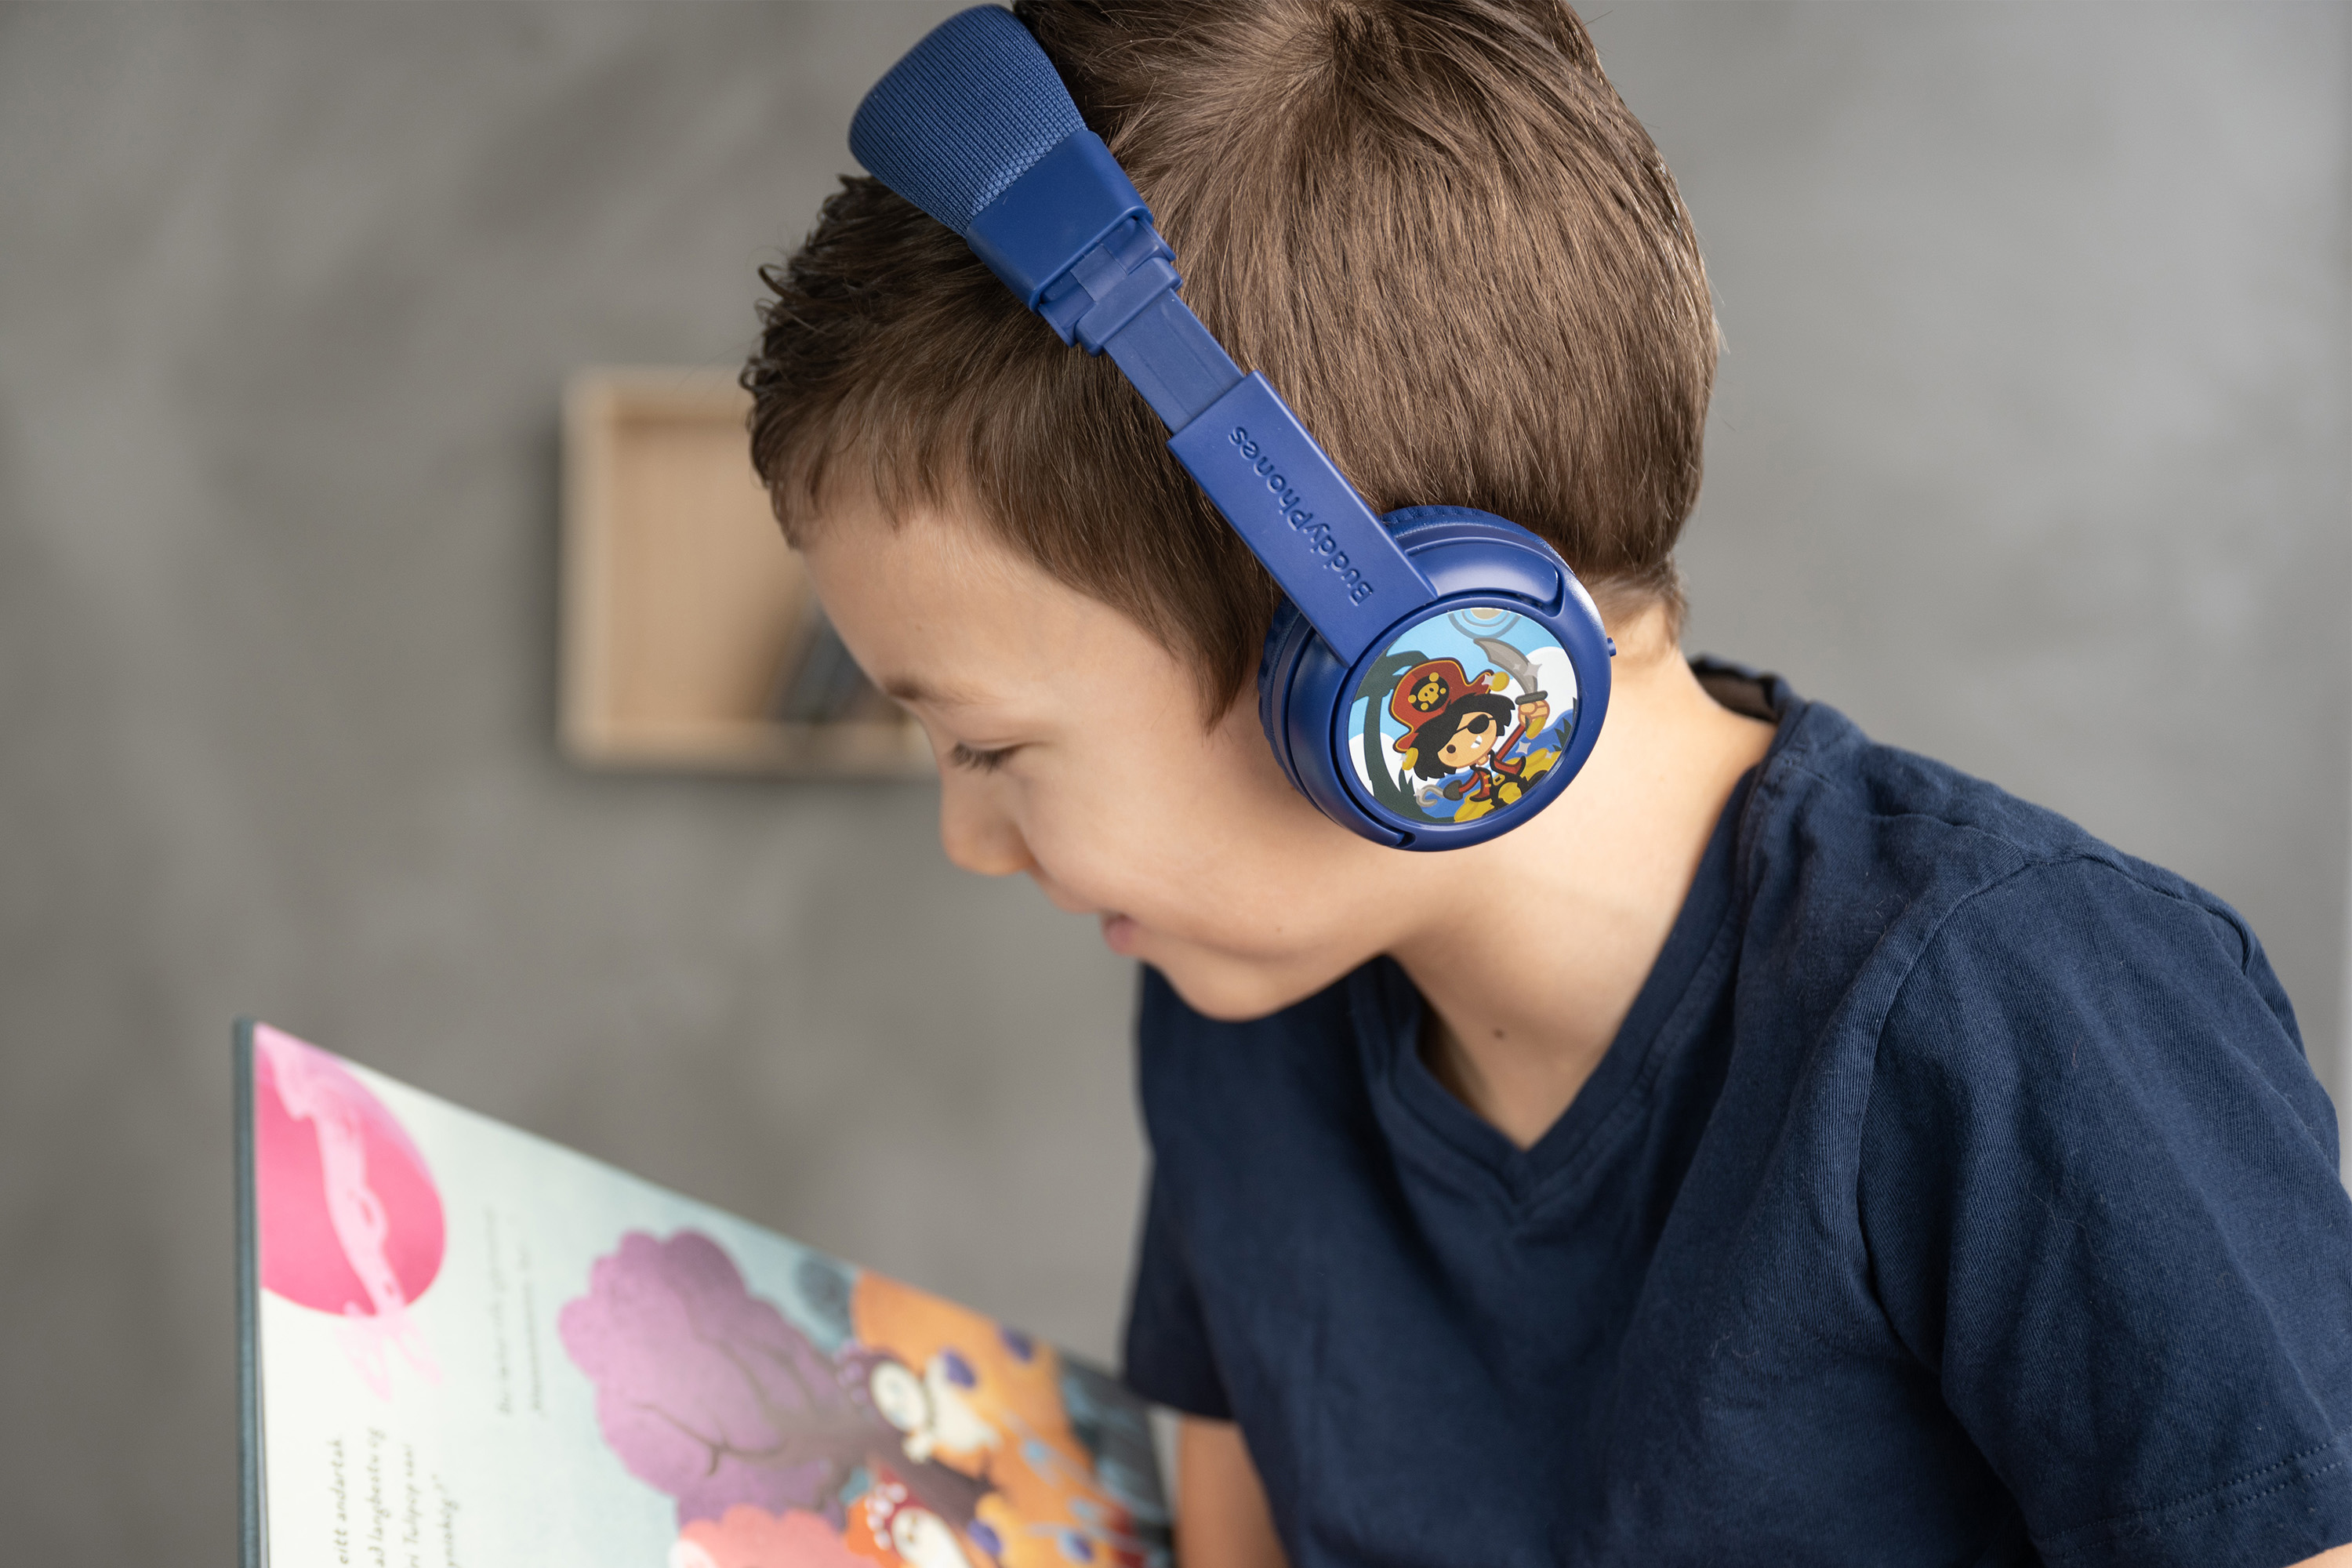 BUDDYPHONES Play+, On-ear Kinder Kopfhörer Weiß Bluetooth